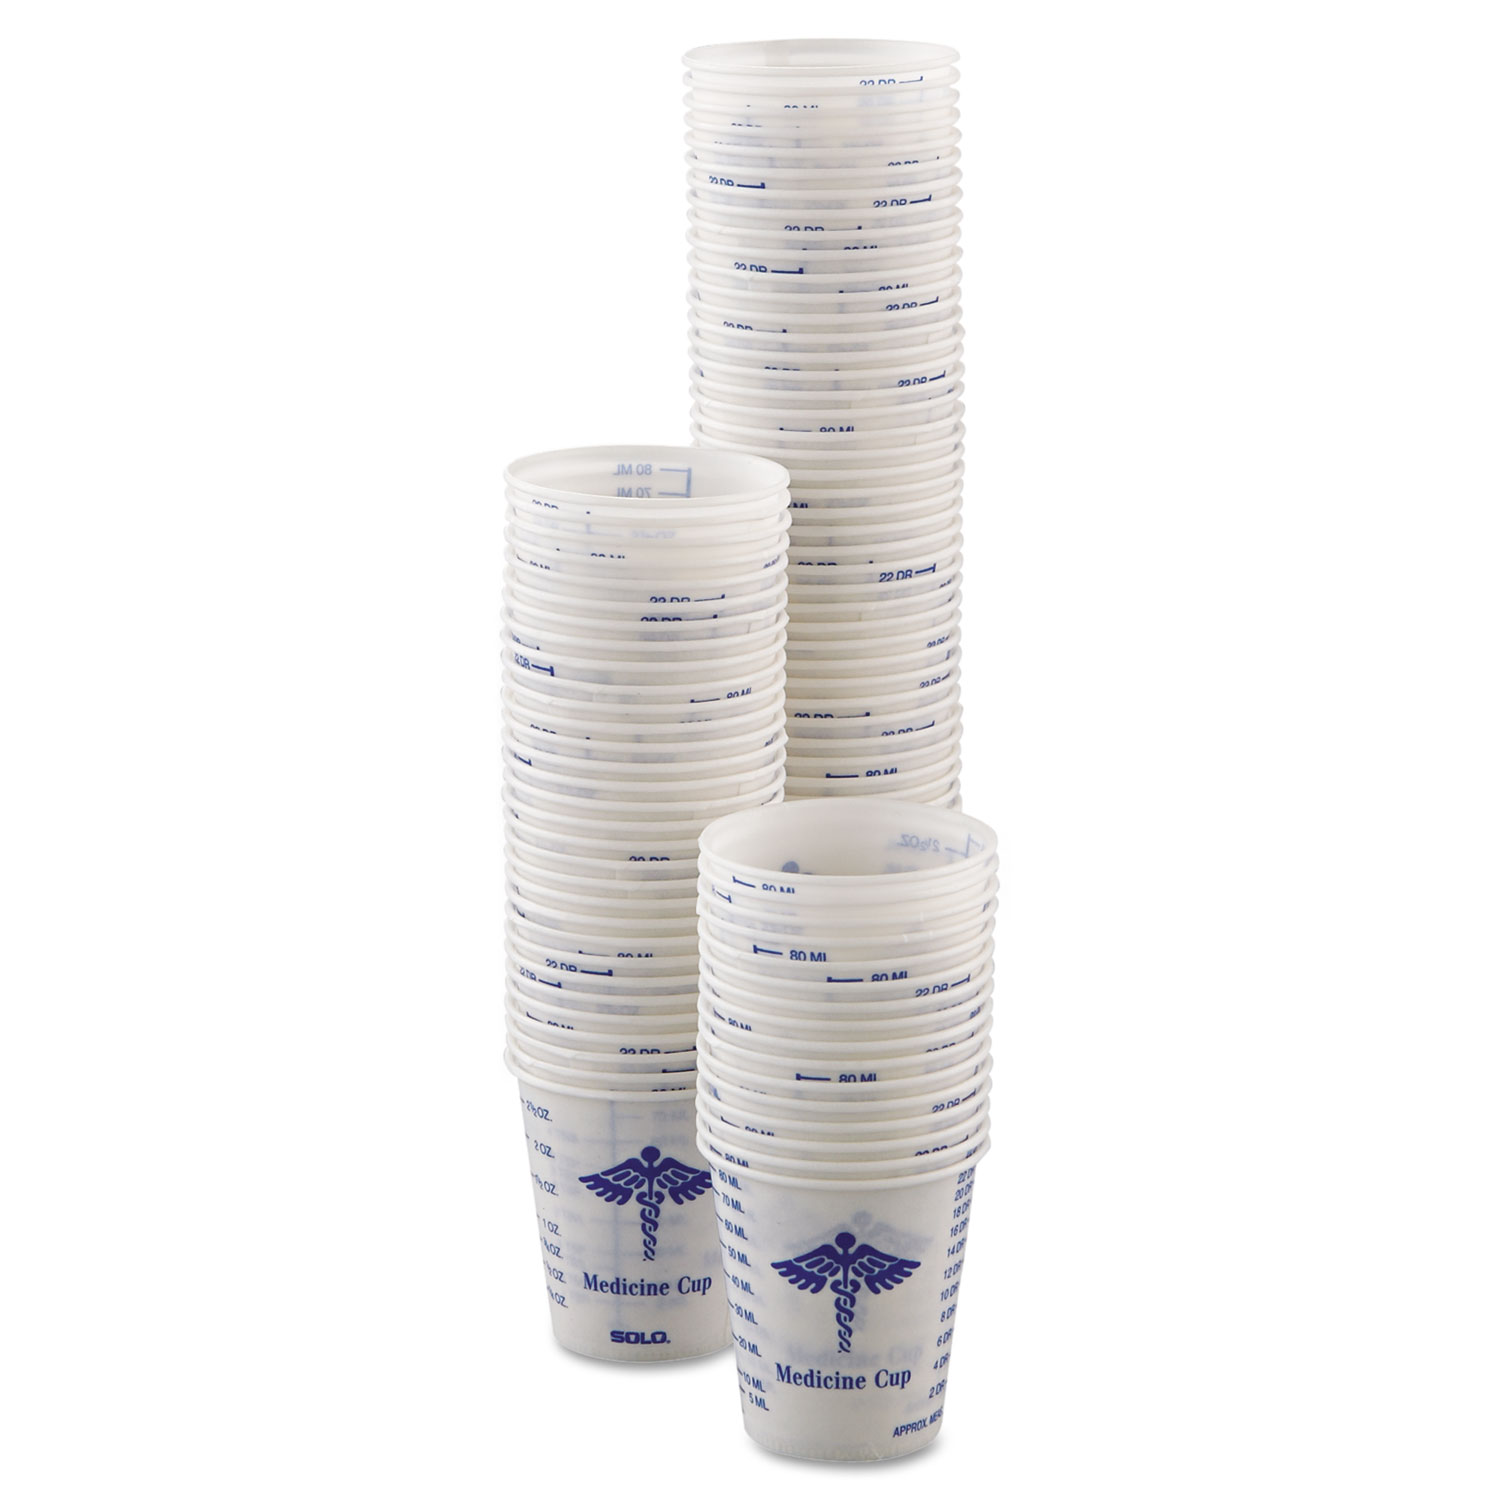 Paper Medical & Dental Graduated Cups, 3oz, White/Blue, 100/Bag, 50 Bags/Carton